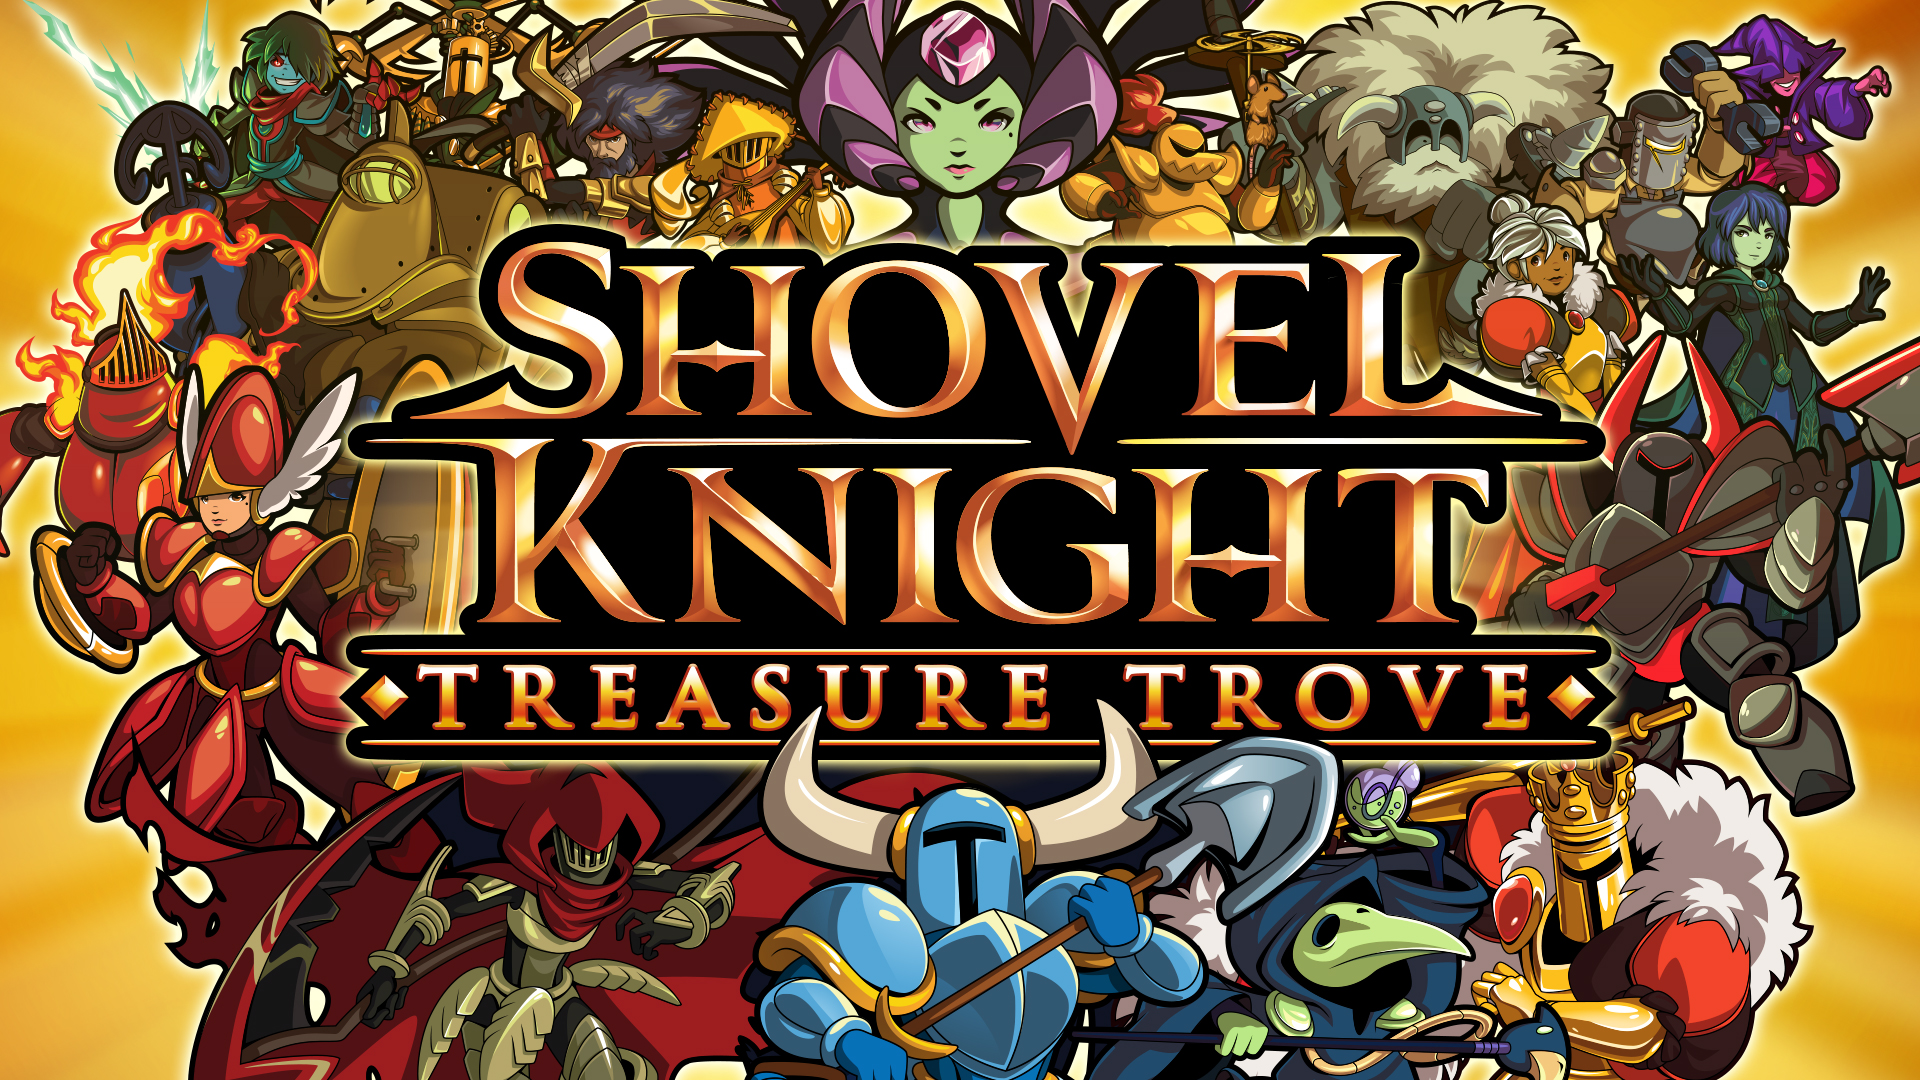 Download shovel knight treasure trove mac for free atlasvpn download